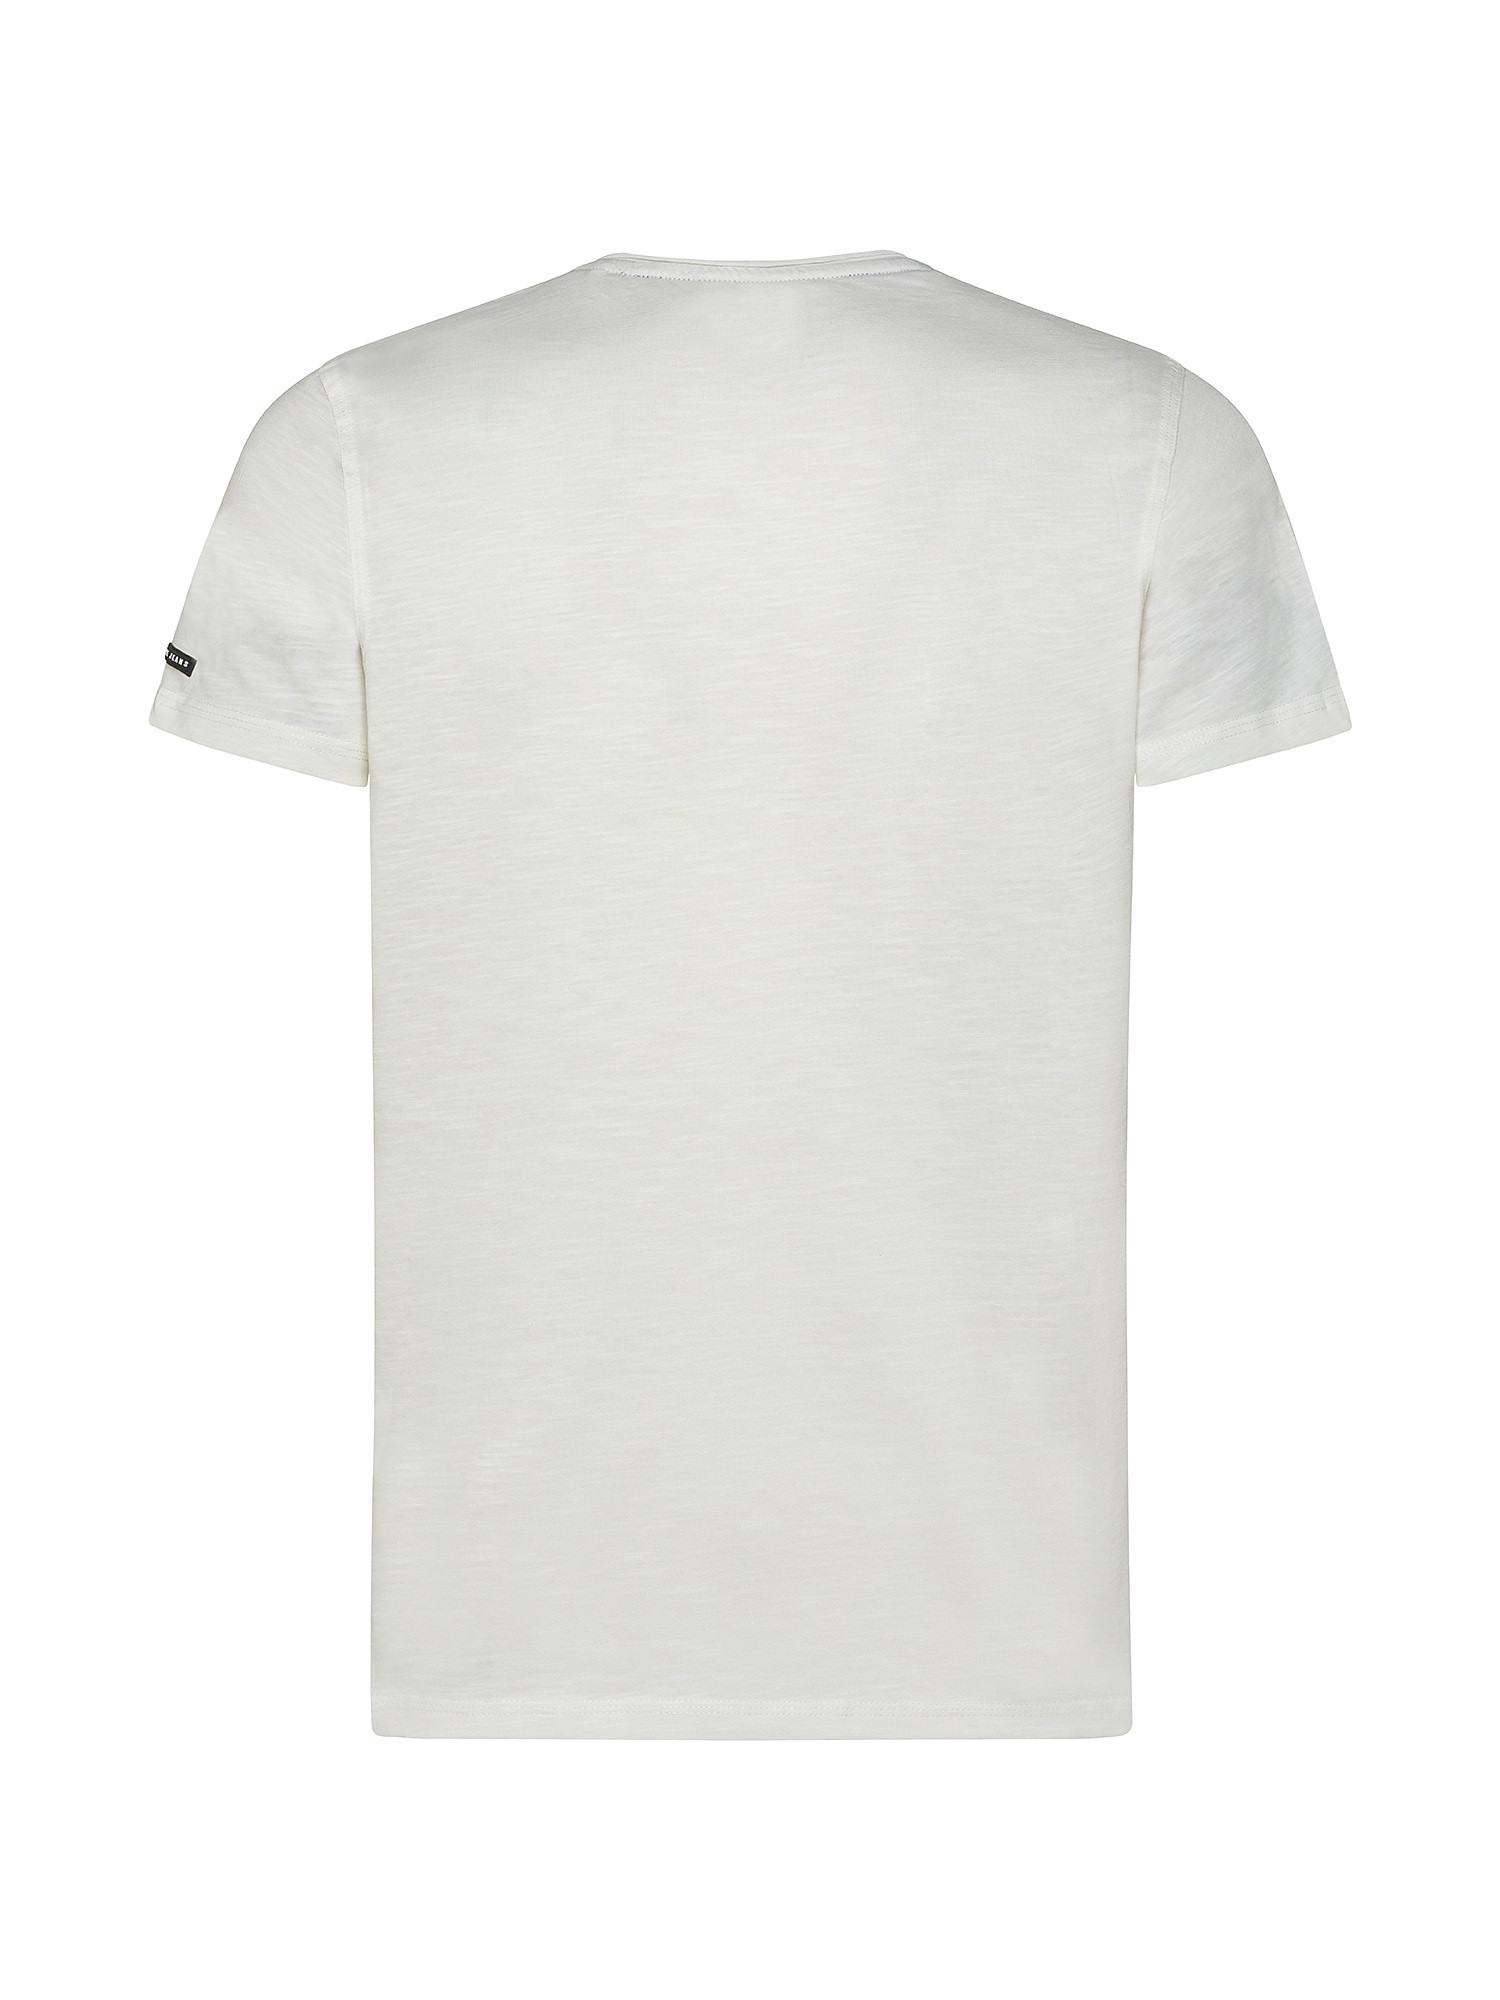 Sherlock cotton T-shirt, White, large image number 1